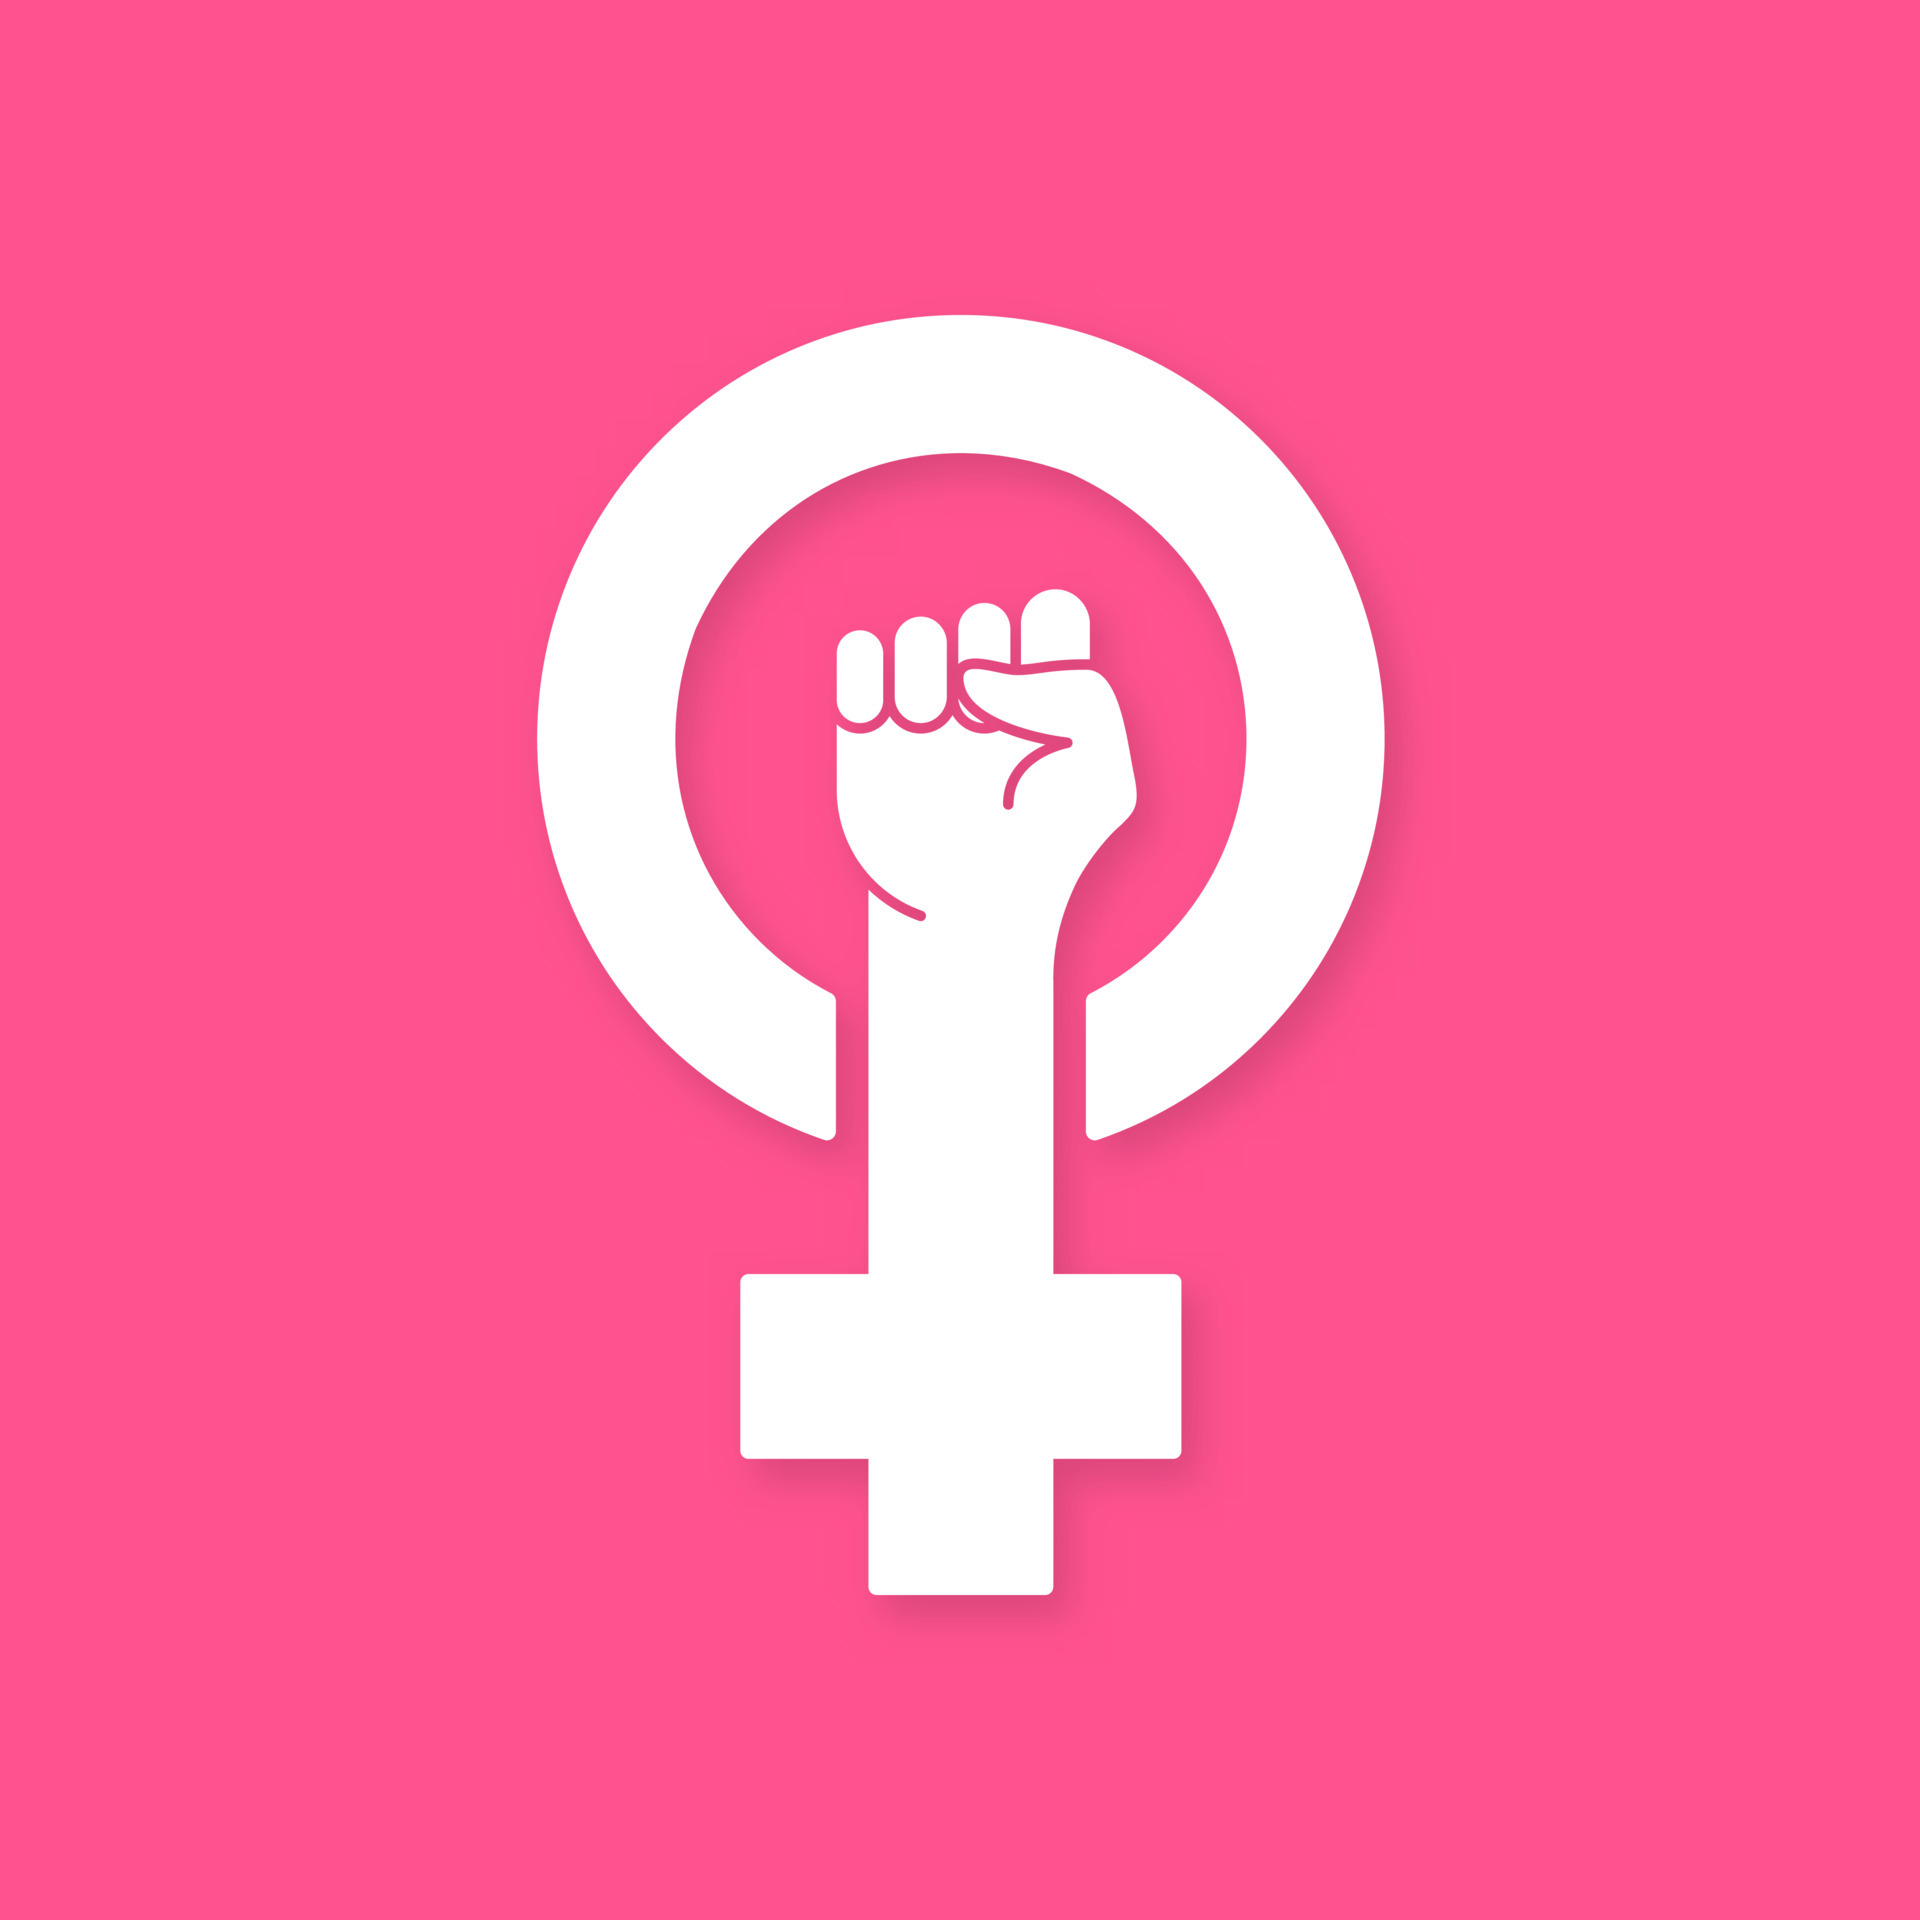 Womens Rights Symbol